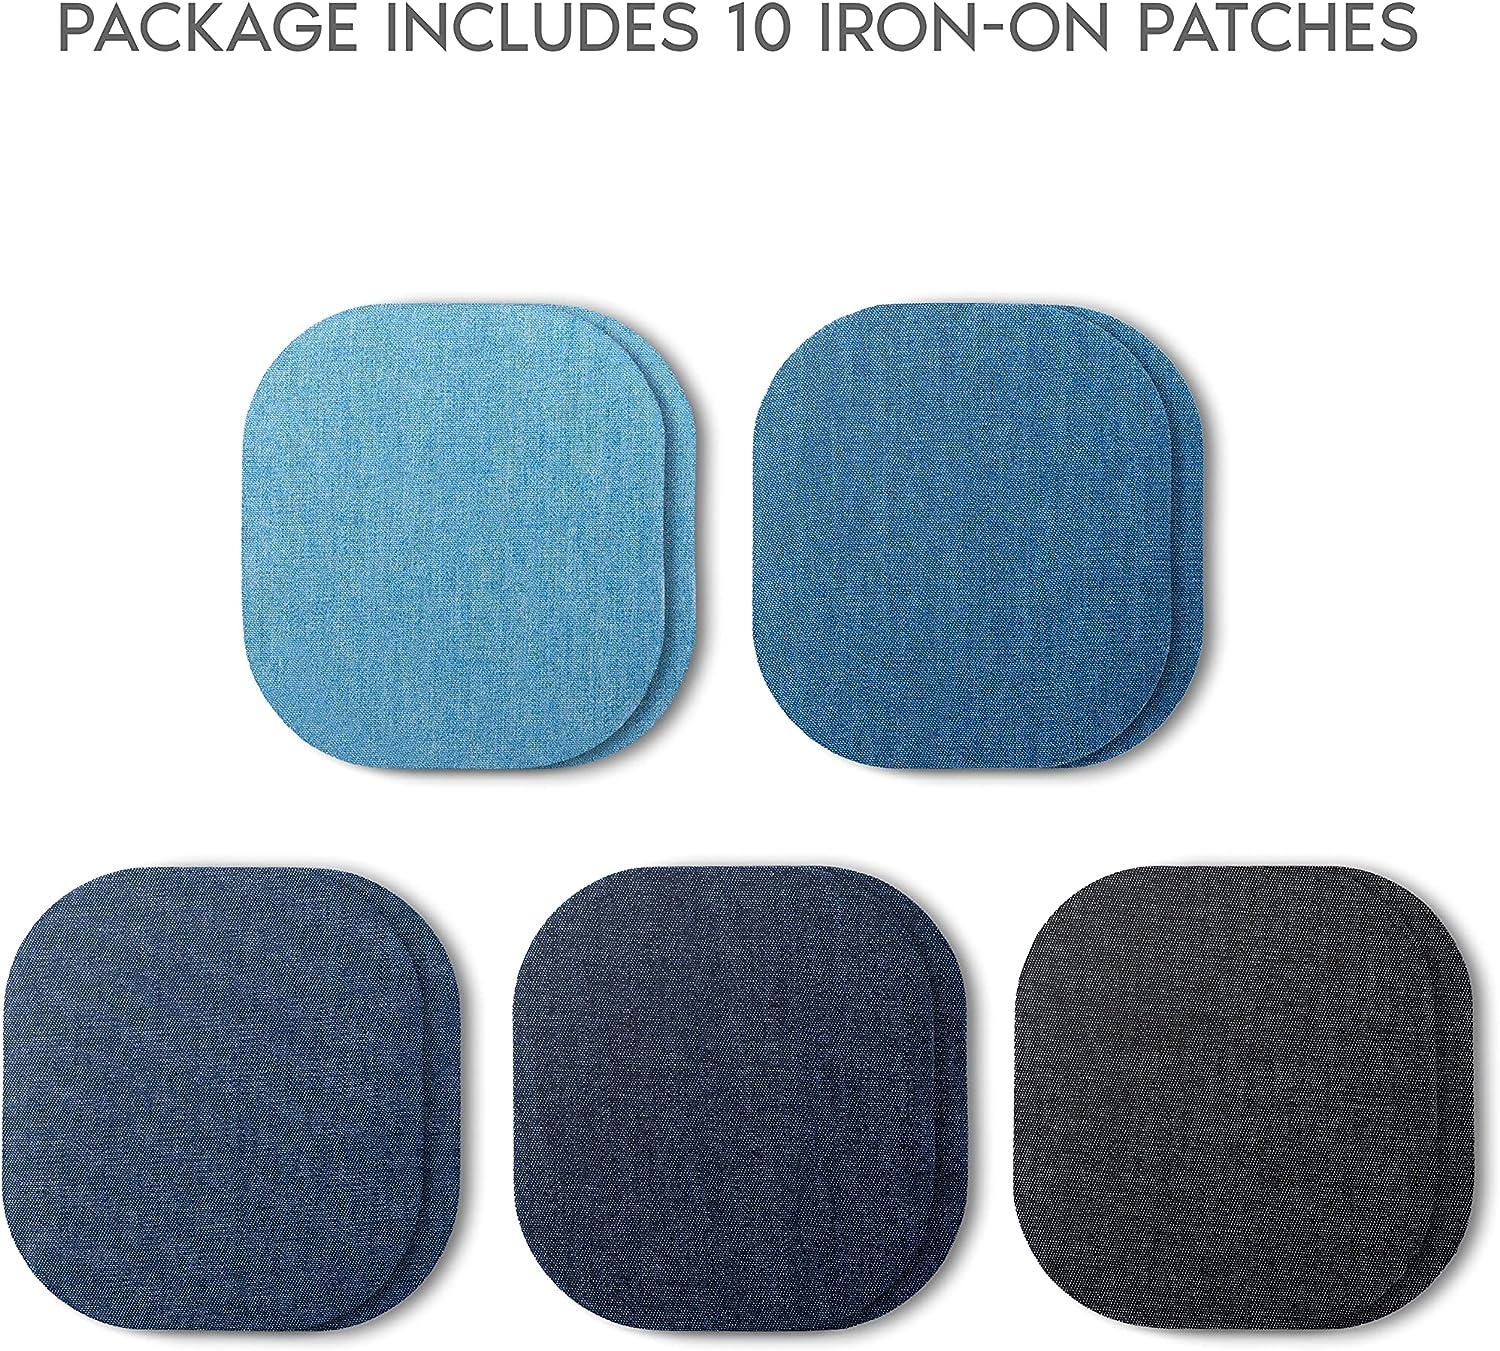 ZEFFFKA Premium Quality Denim Iron-on Jean Patches Inside